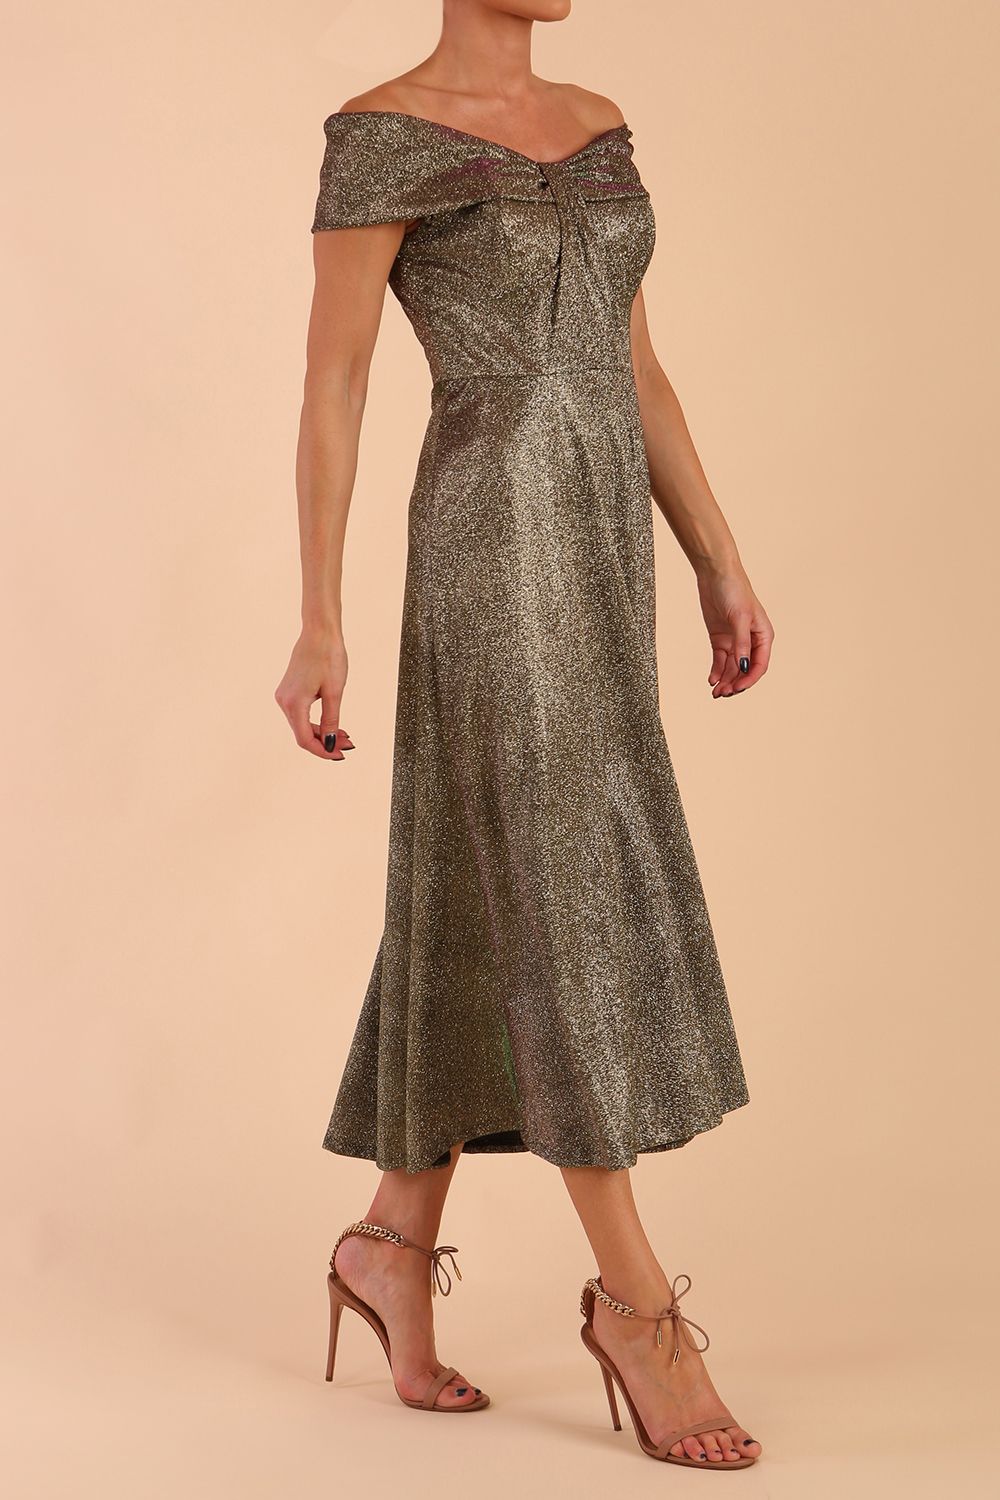 Model wearing diva catwalk Capri A-Line Midaxi Glitter Dress in Sherwood Glitter Gold side